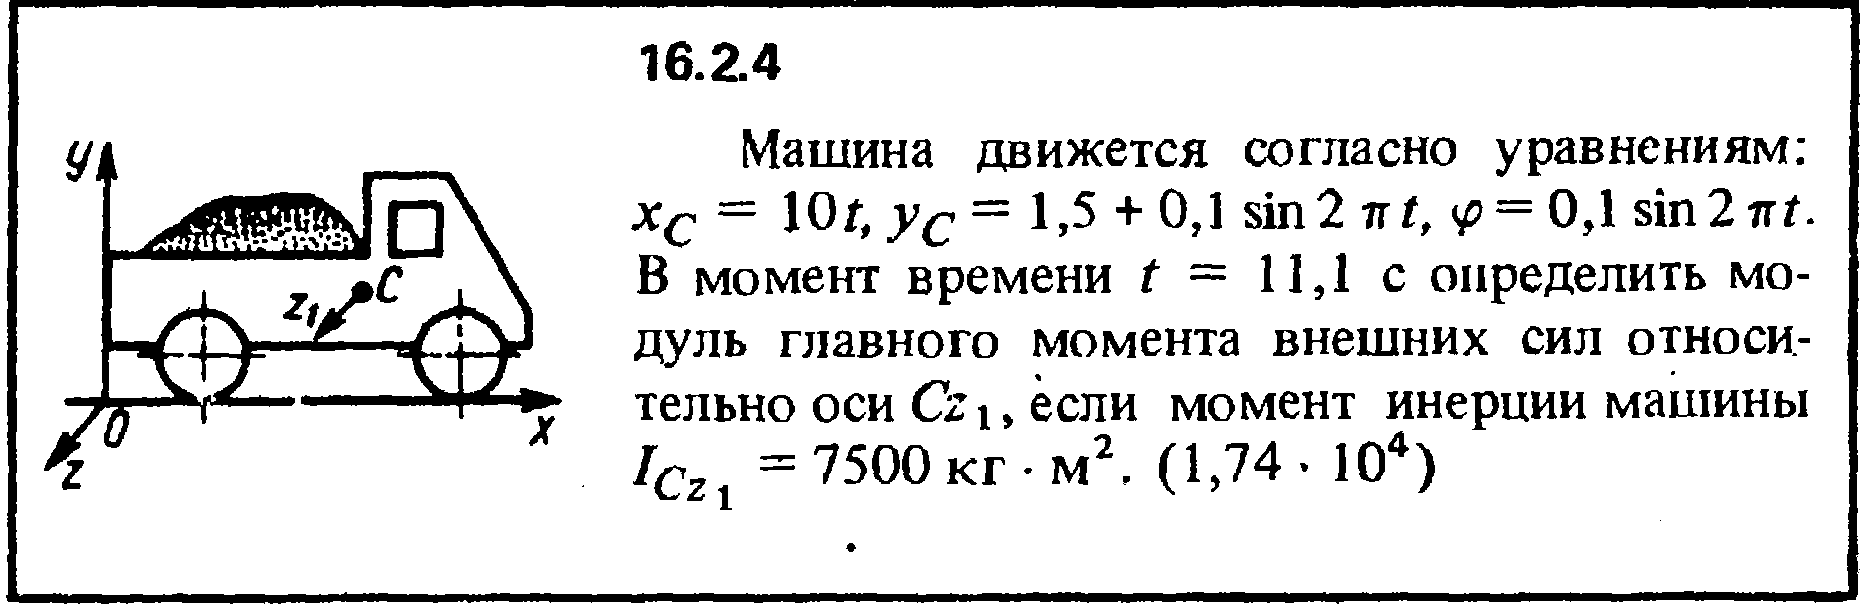 Решение задачи 16.2.4 из сборника Кепе О.Е. 1989 года